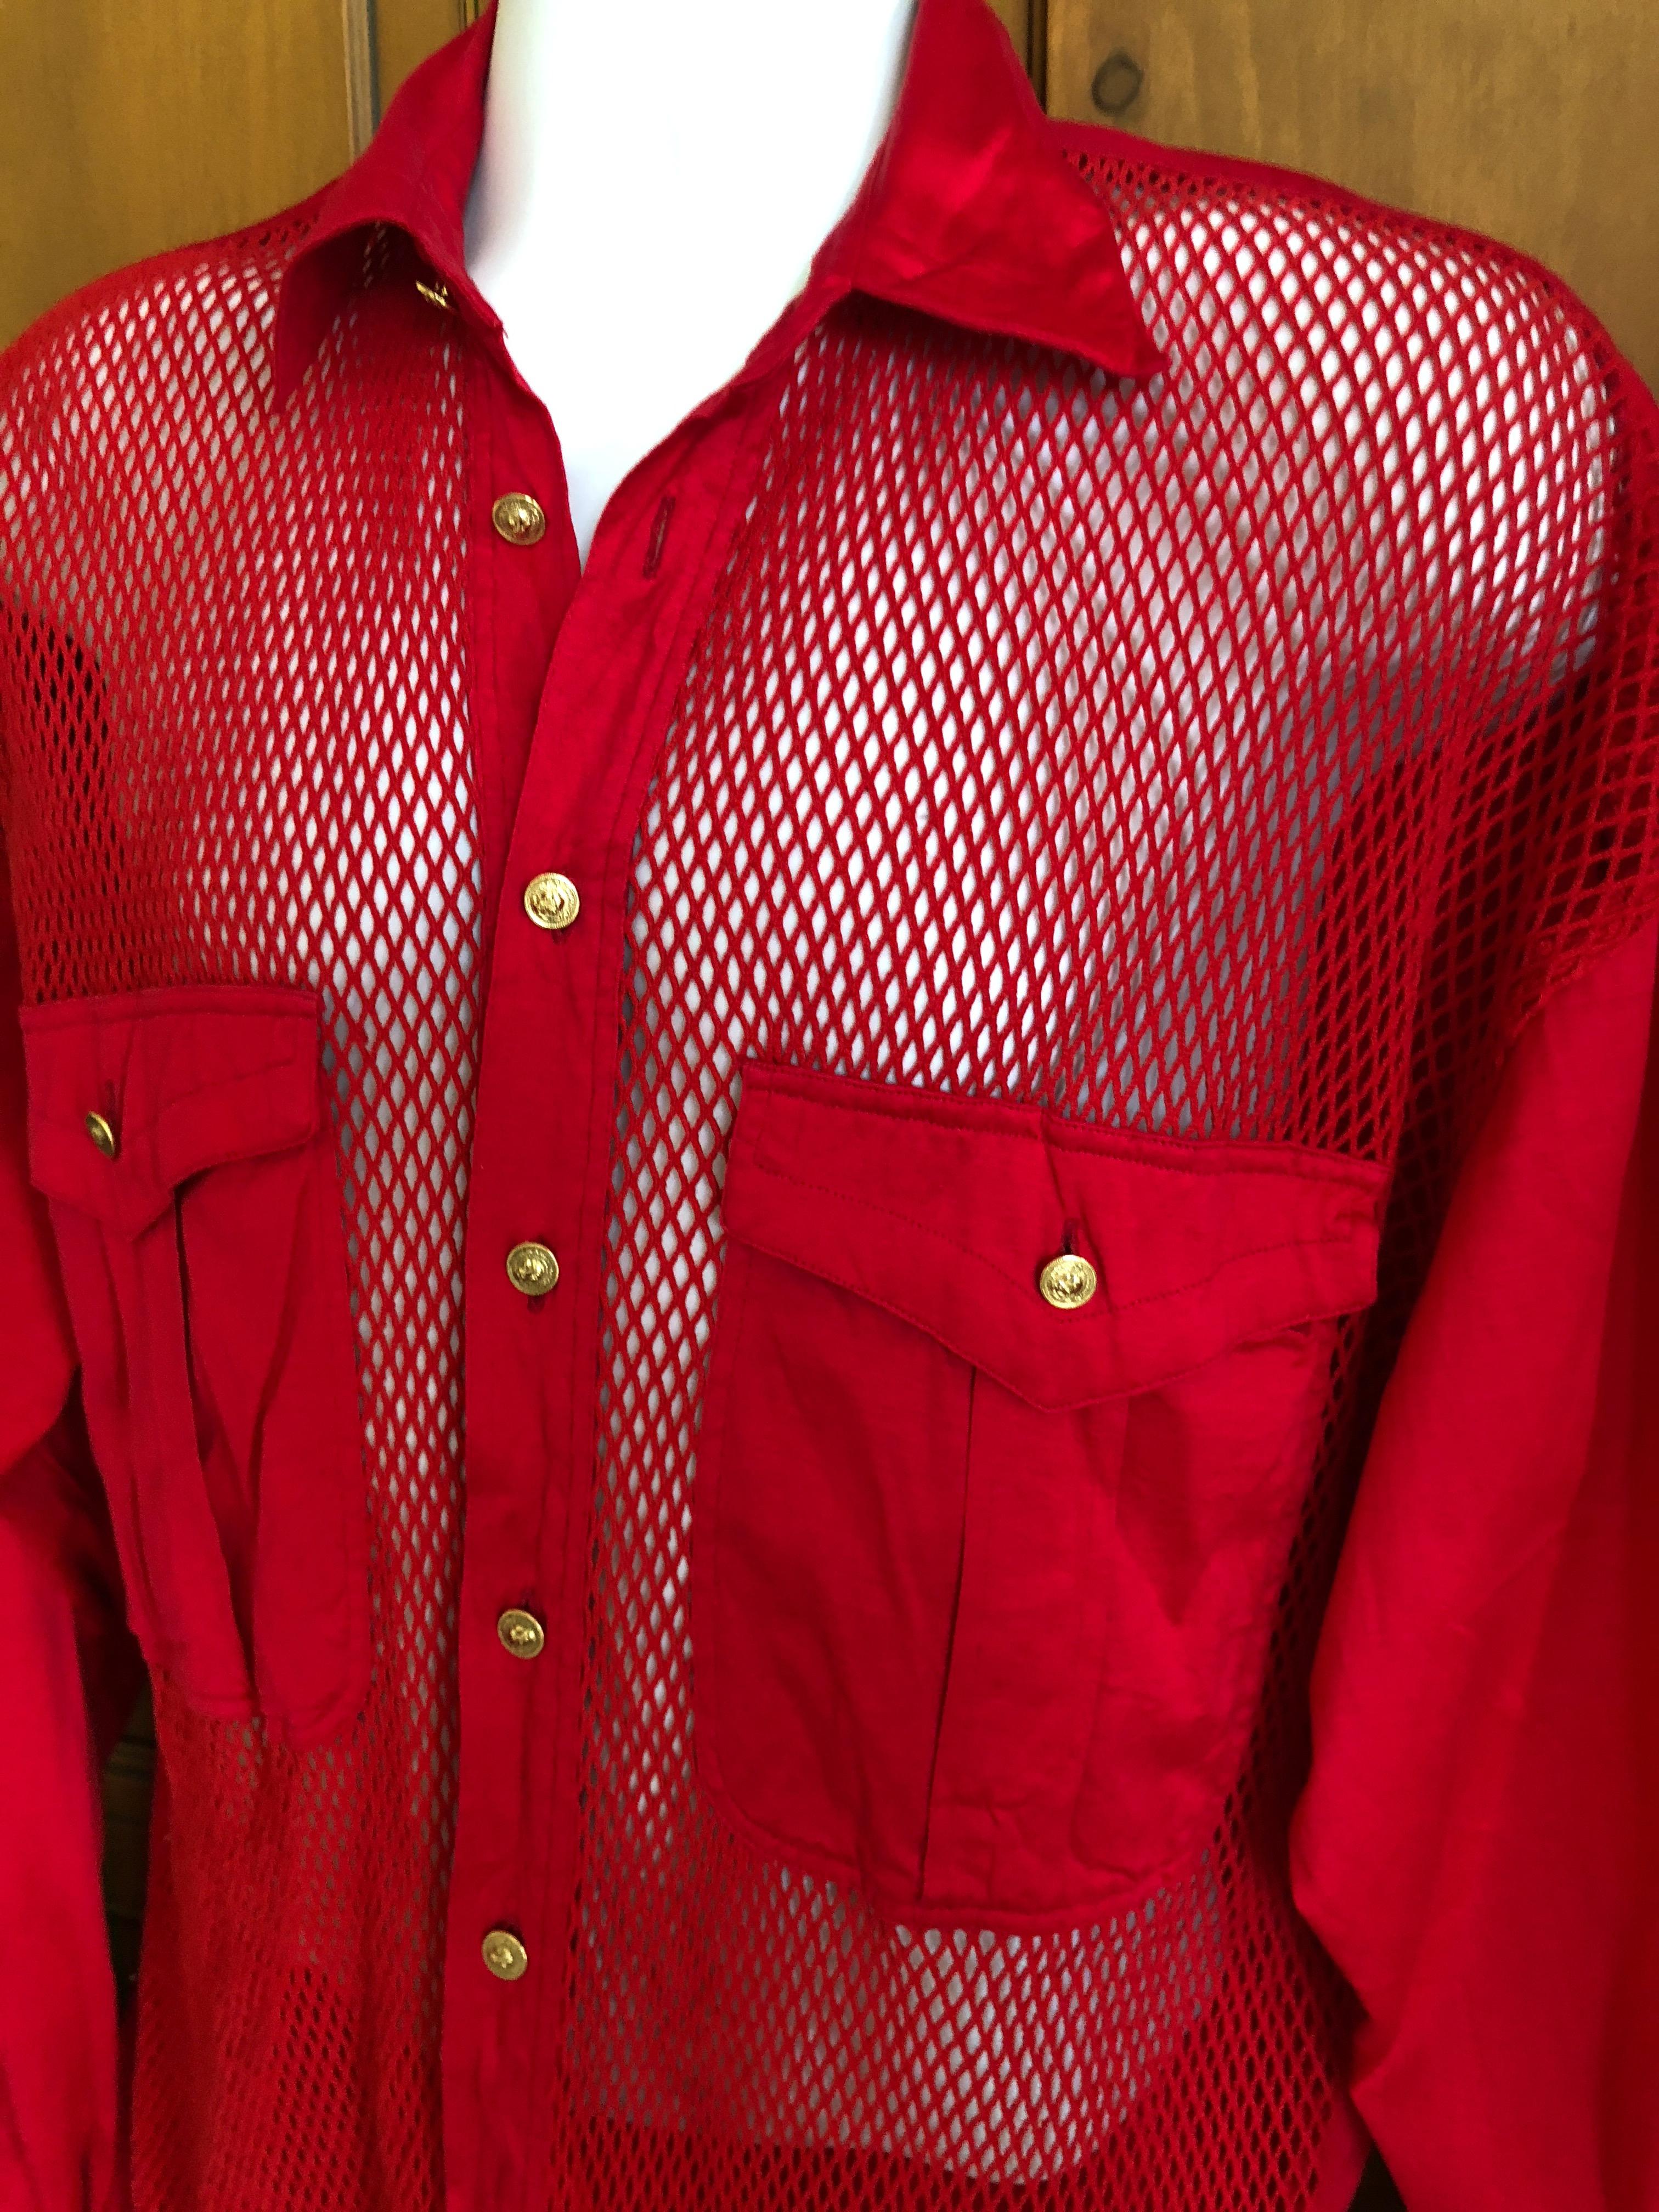 Versus Gianni Versace Rare 1993 Red Sheer Mesh Men's Large Shirt  For Sale 2